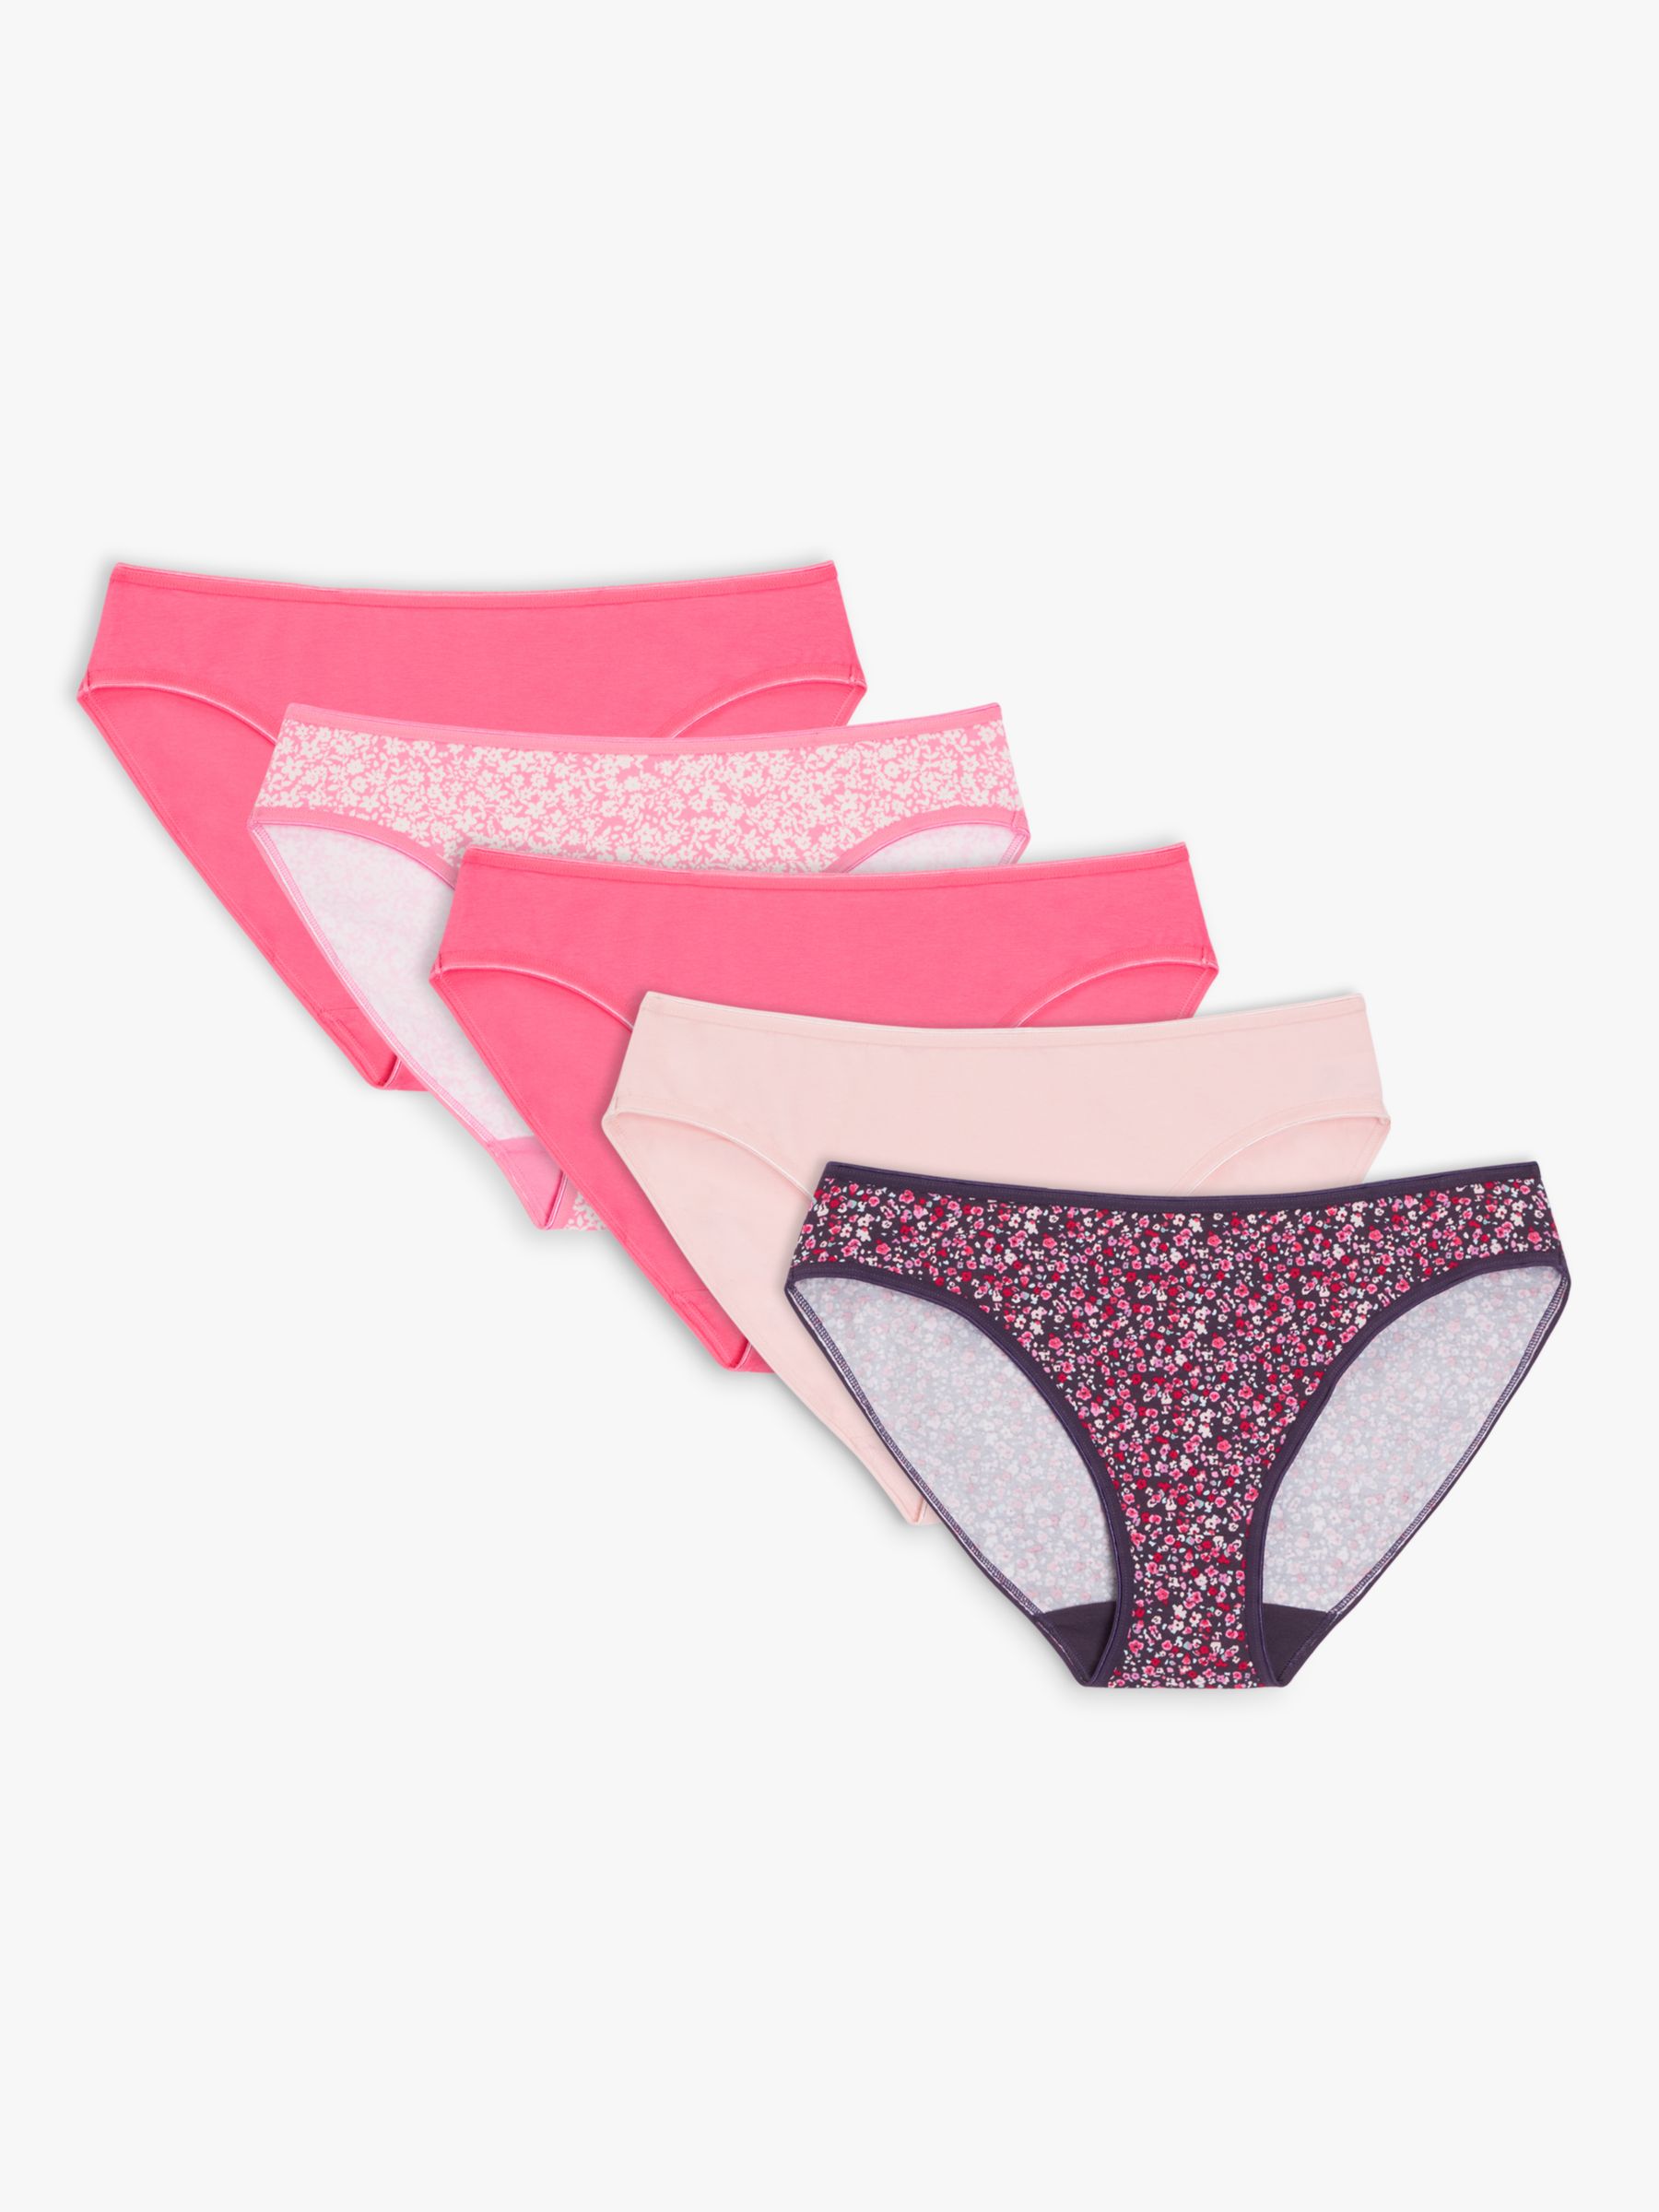 John Lewis ANYDAY Helenca Lace Bikini Knickers, Pack of 3, Pink